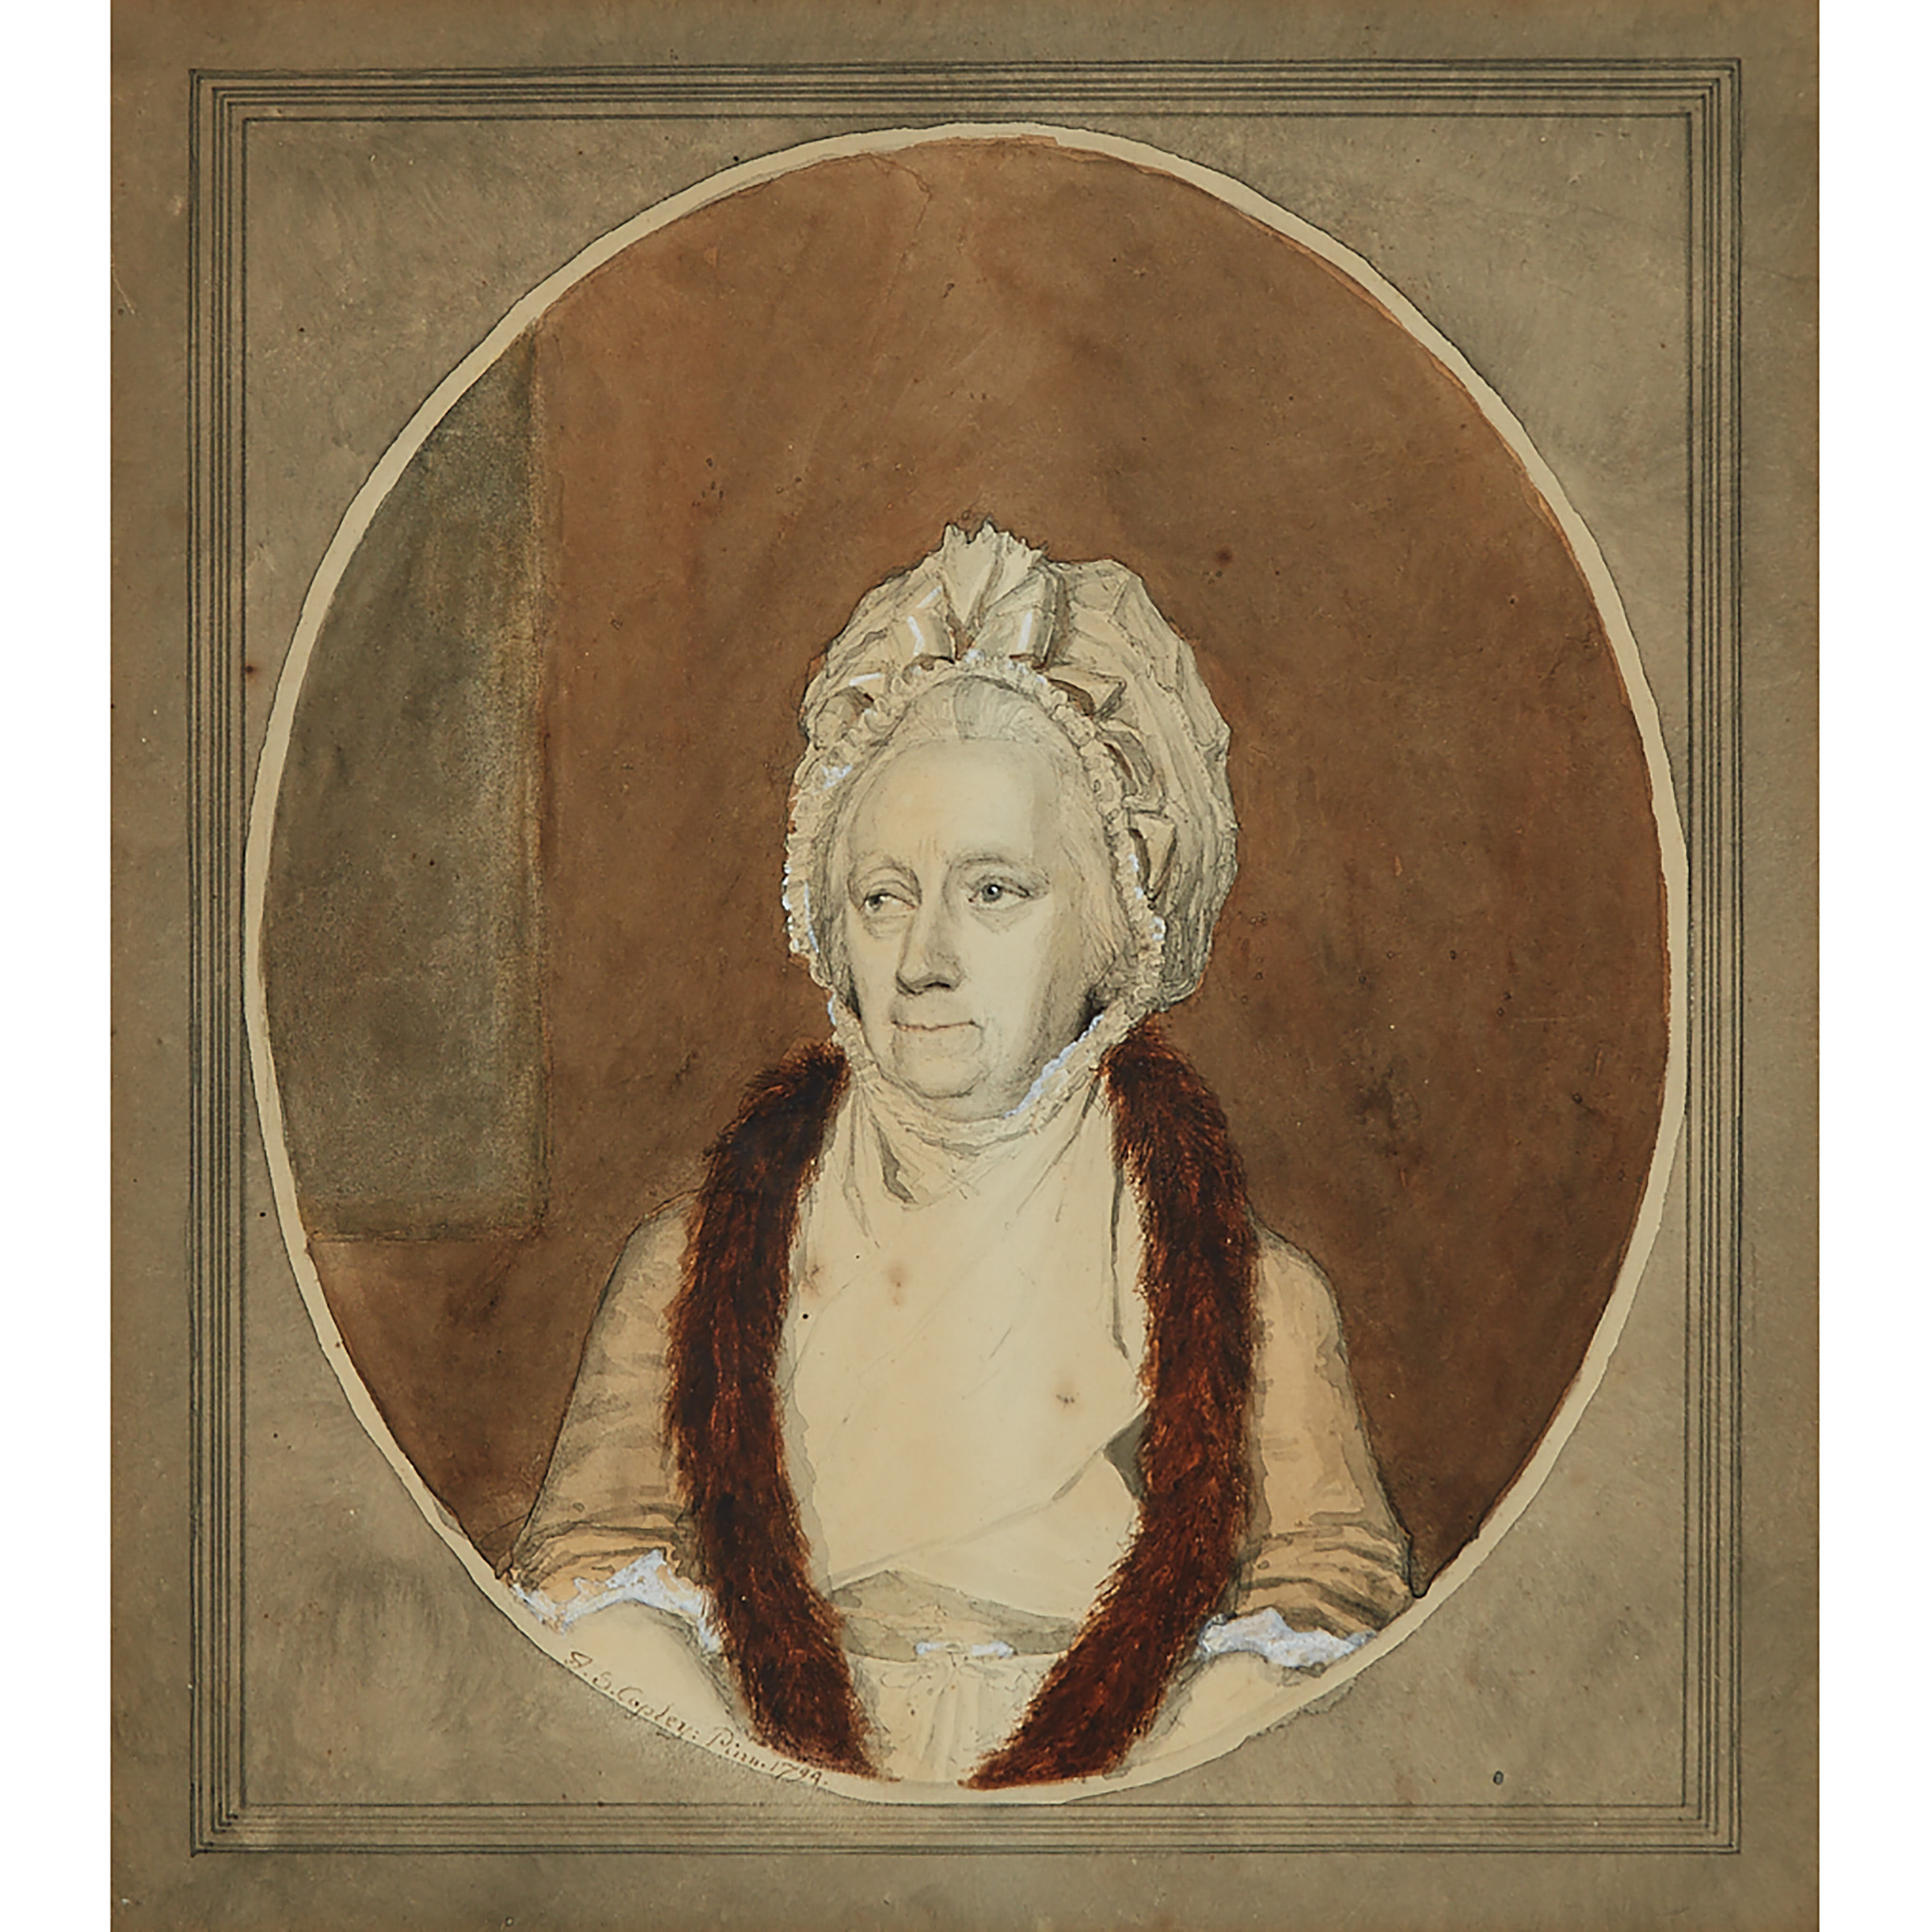 Attributed to John Singleton Copley (1738-1815)